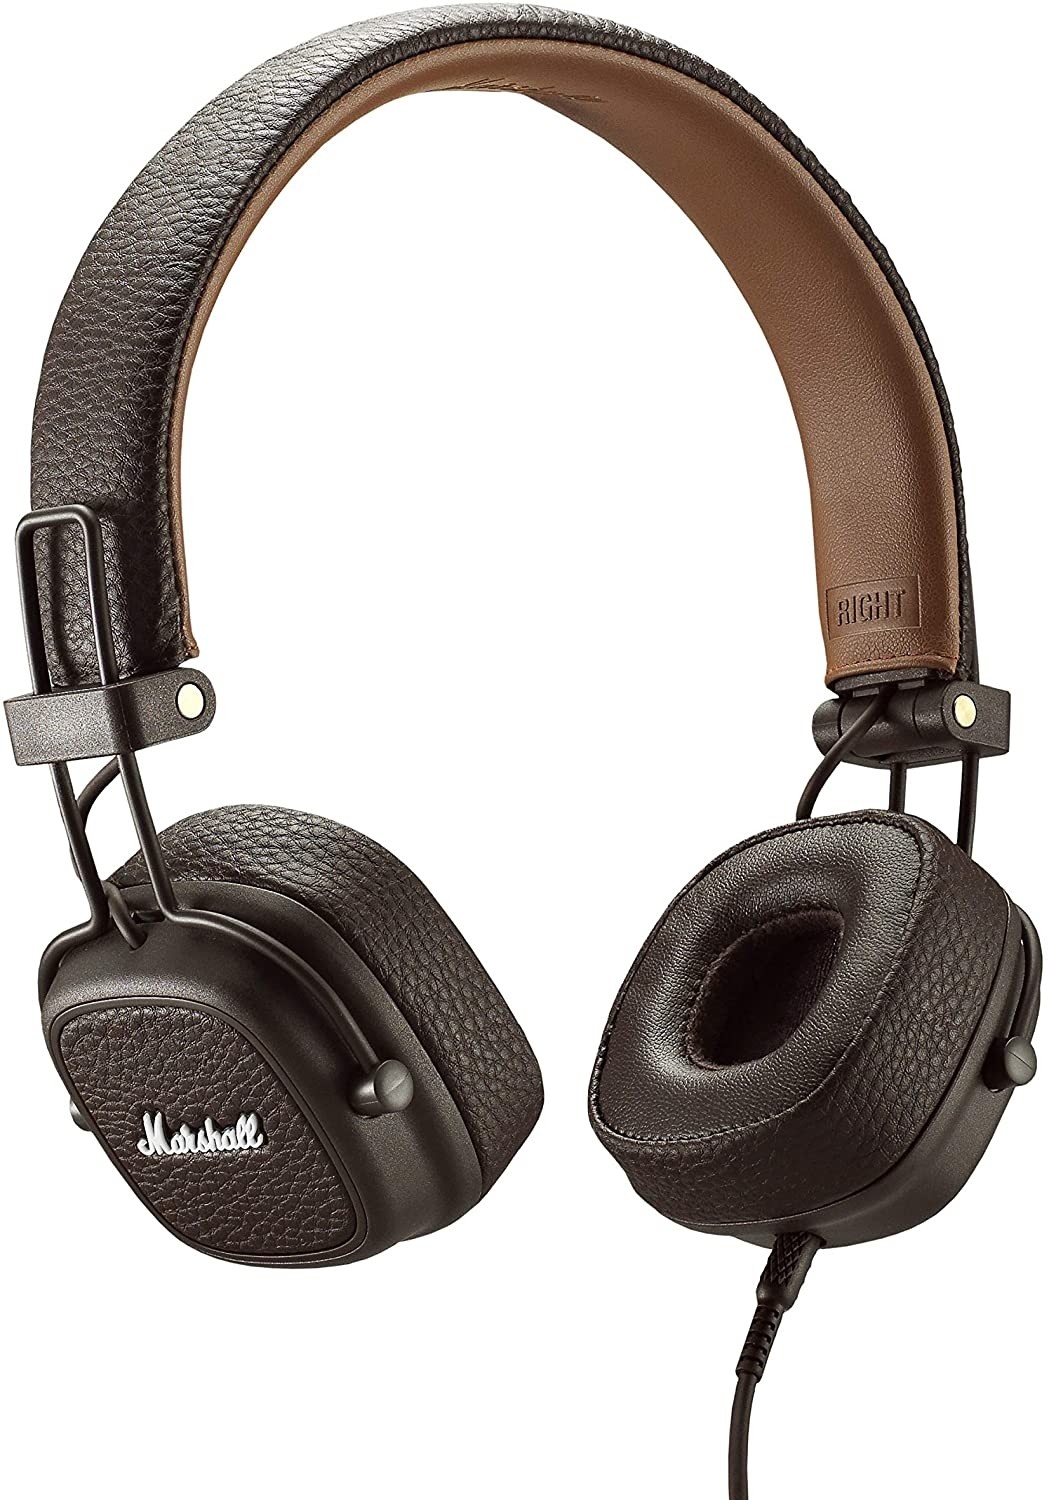 Marshall Major III Foldable Headphones - Brown